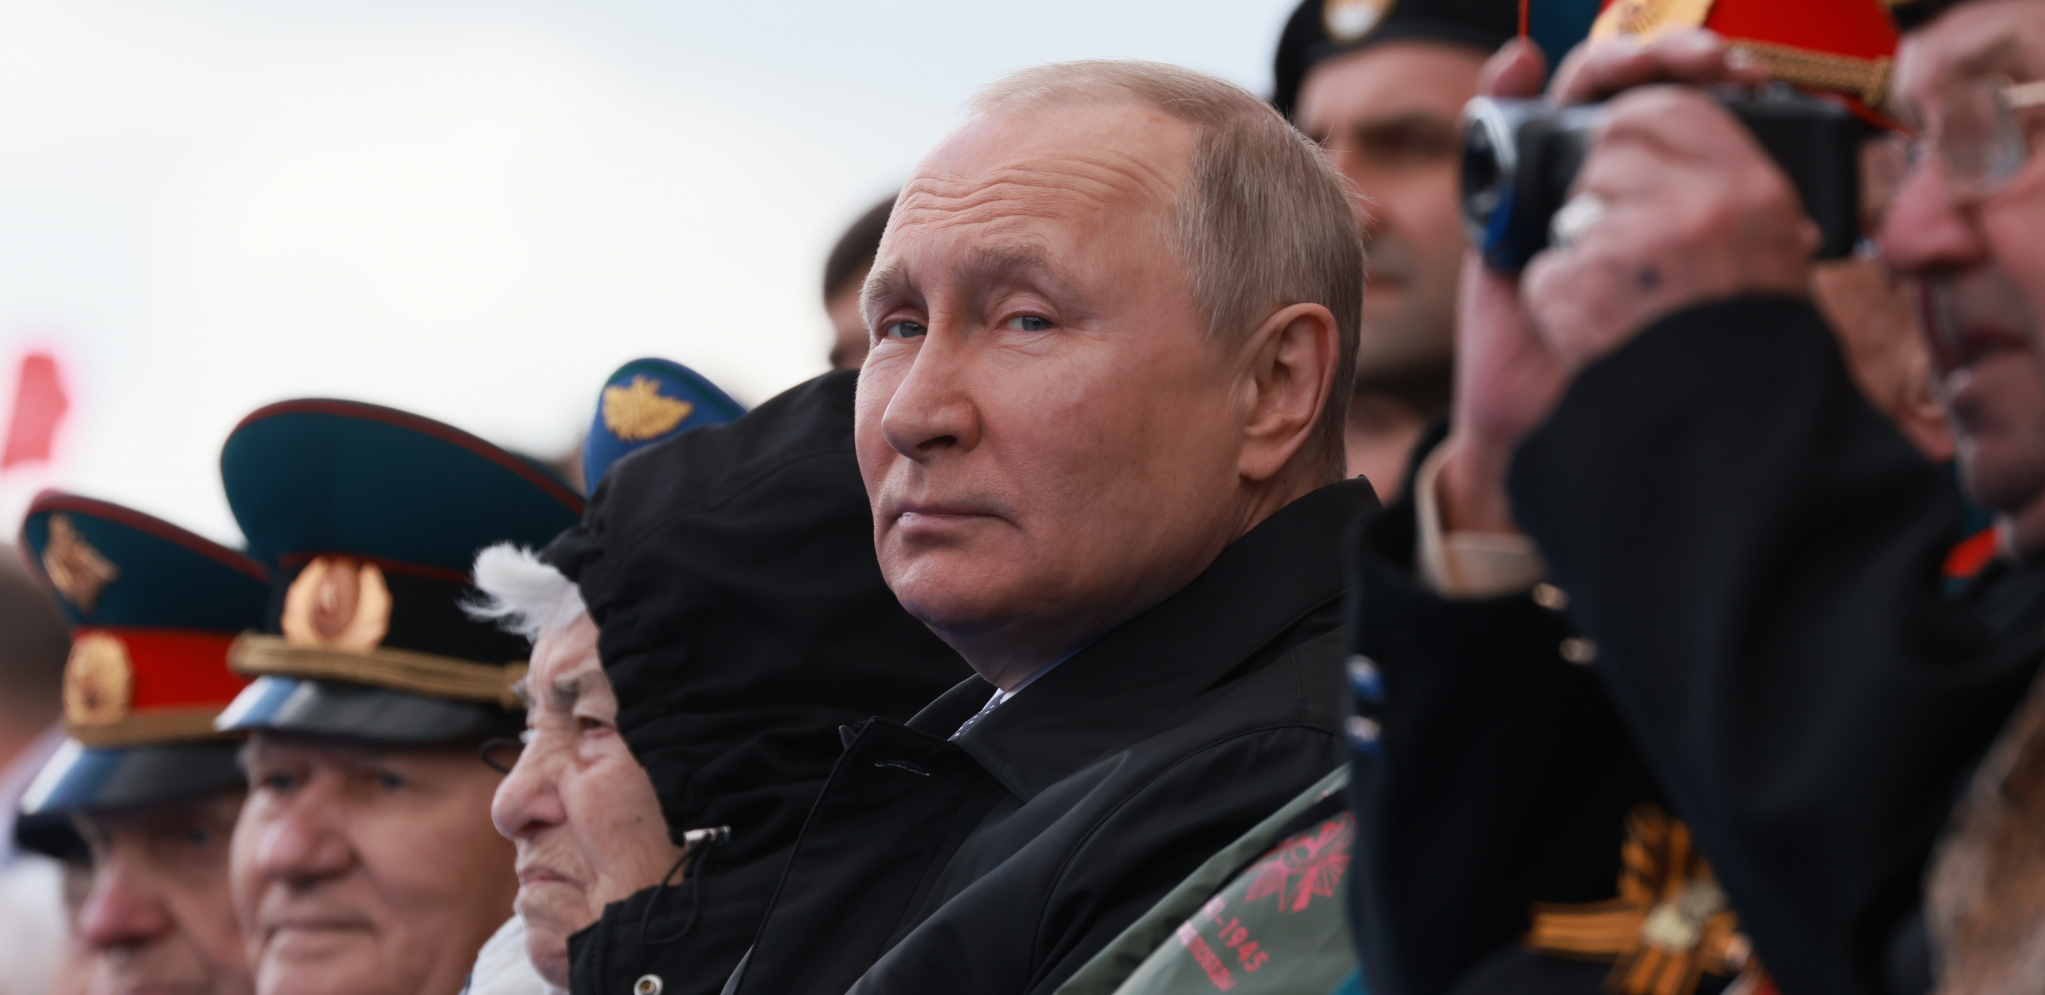 "POGREŠIĆETE" Putin preneo finskom kolegi:  Odustajanje od neutralnosti bi bila greška